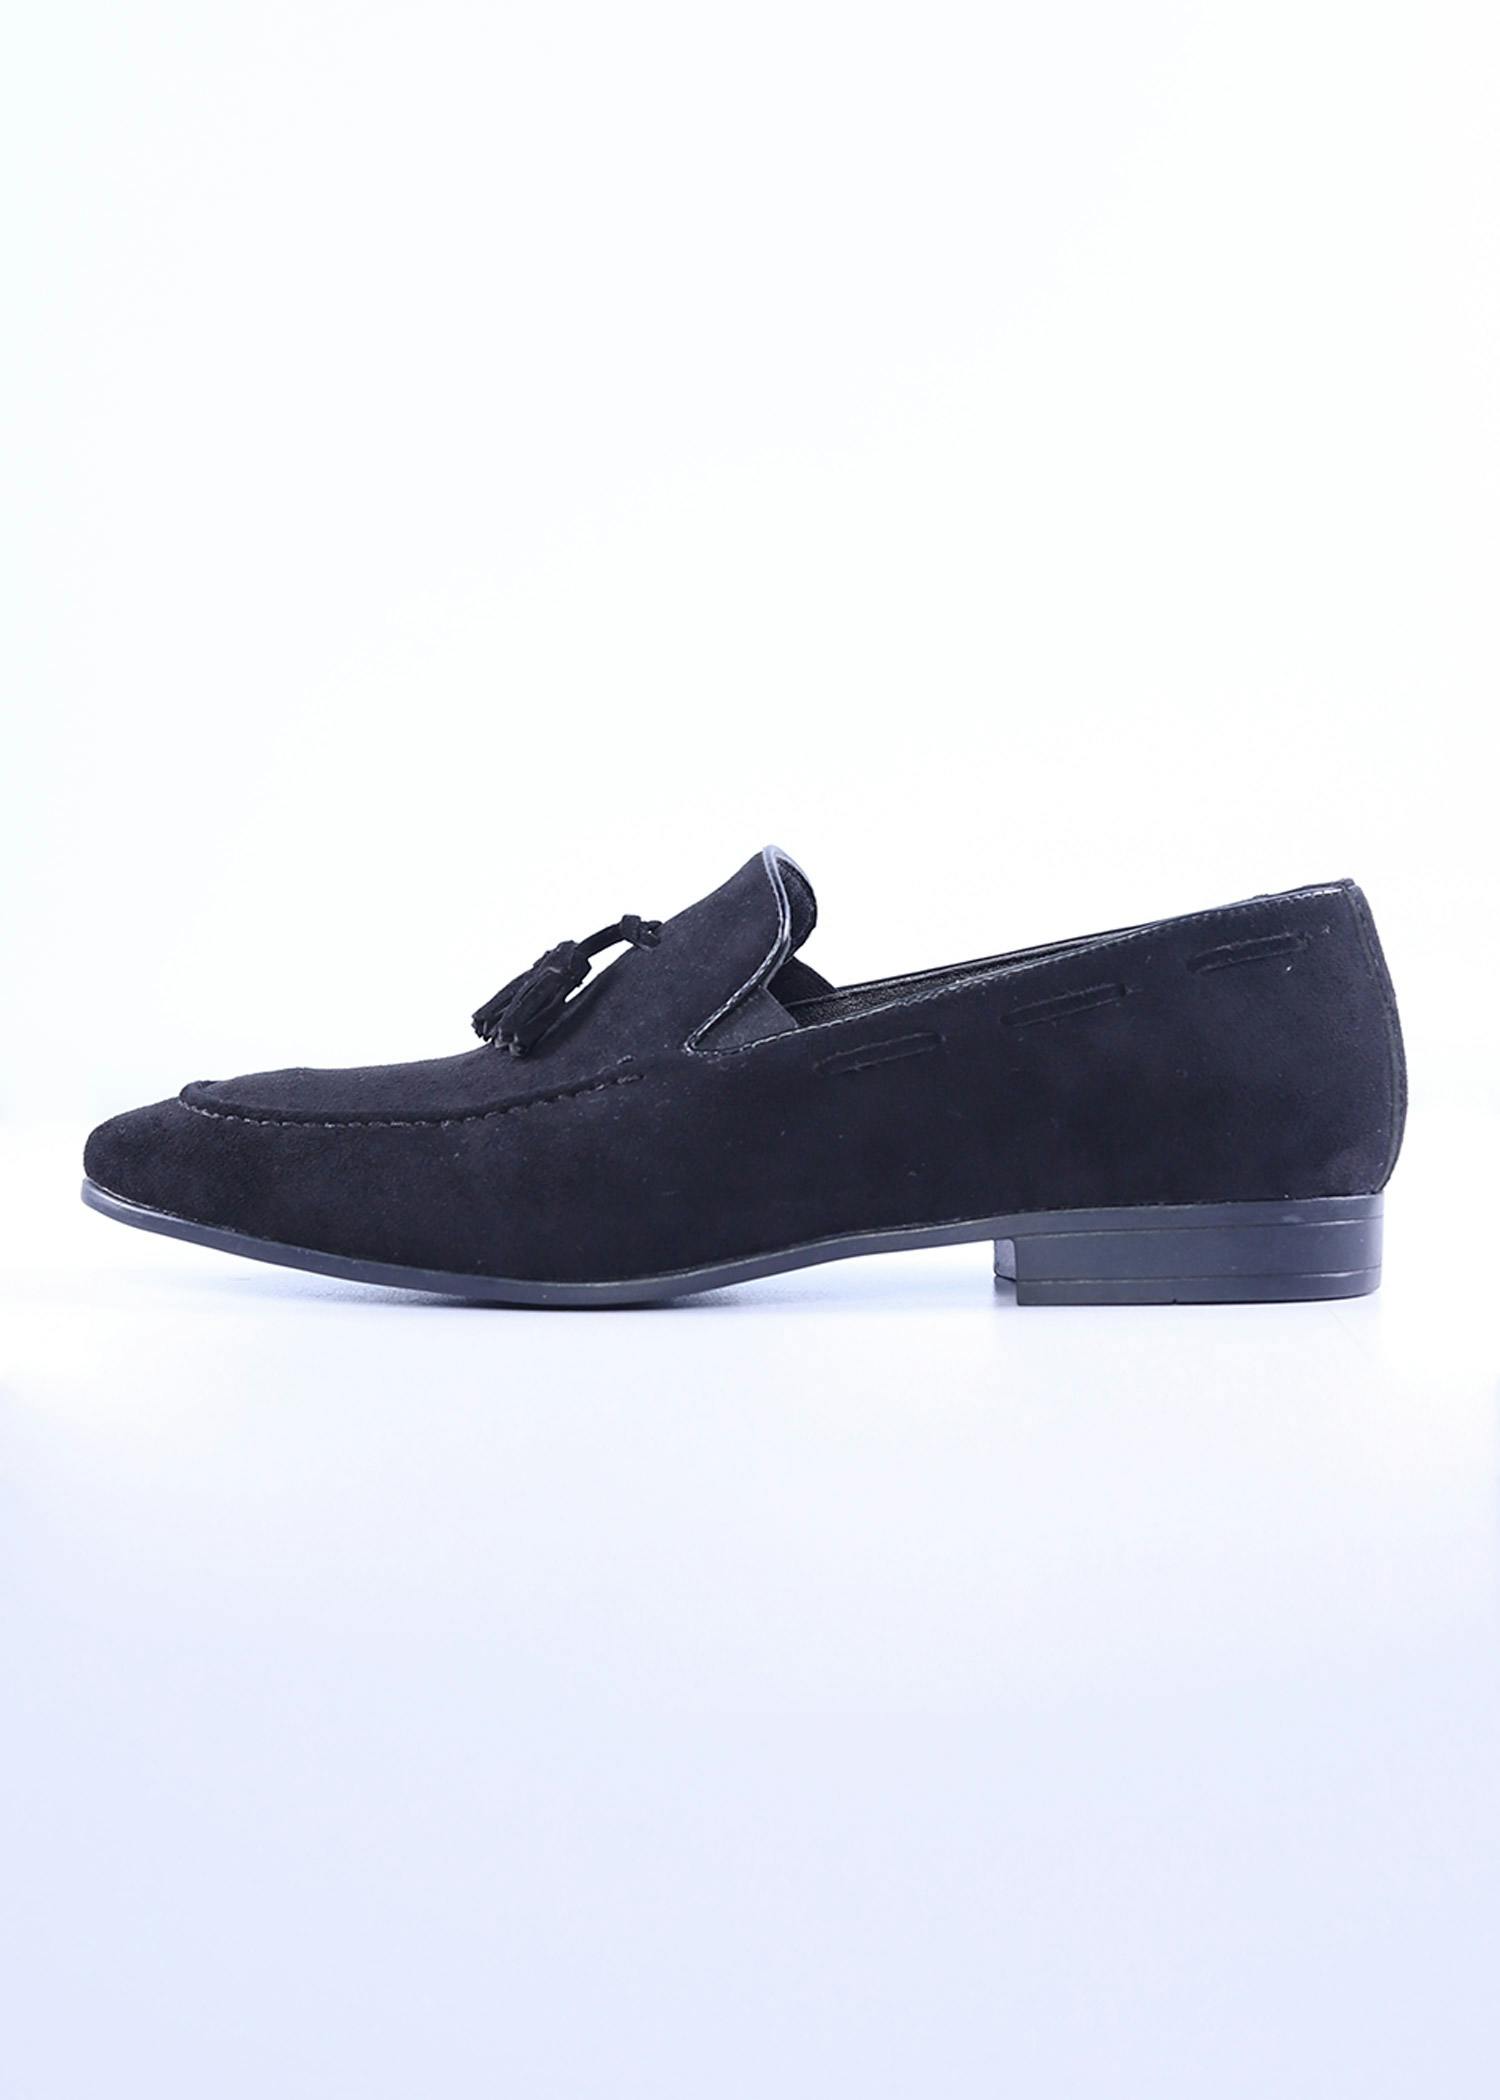 ebru mens shoes black color cover